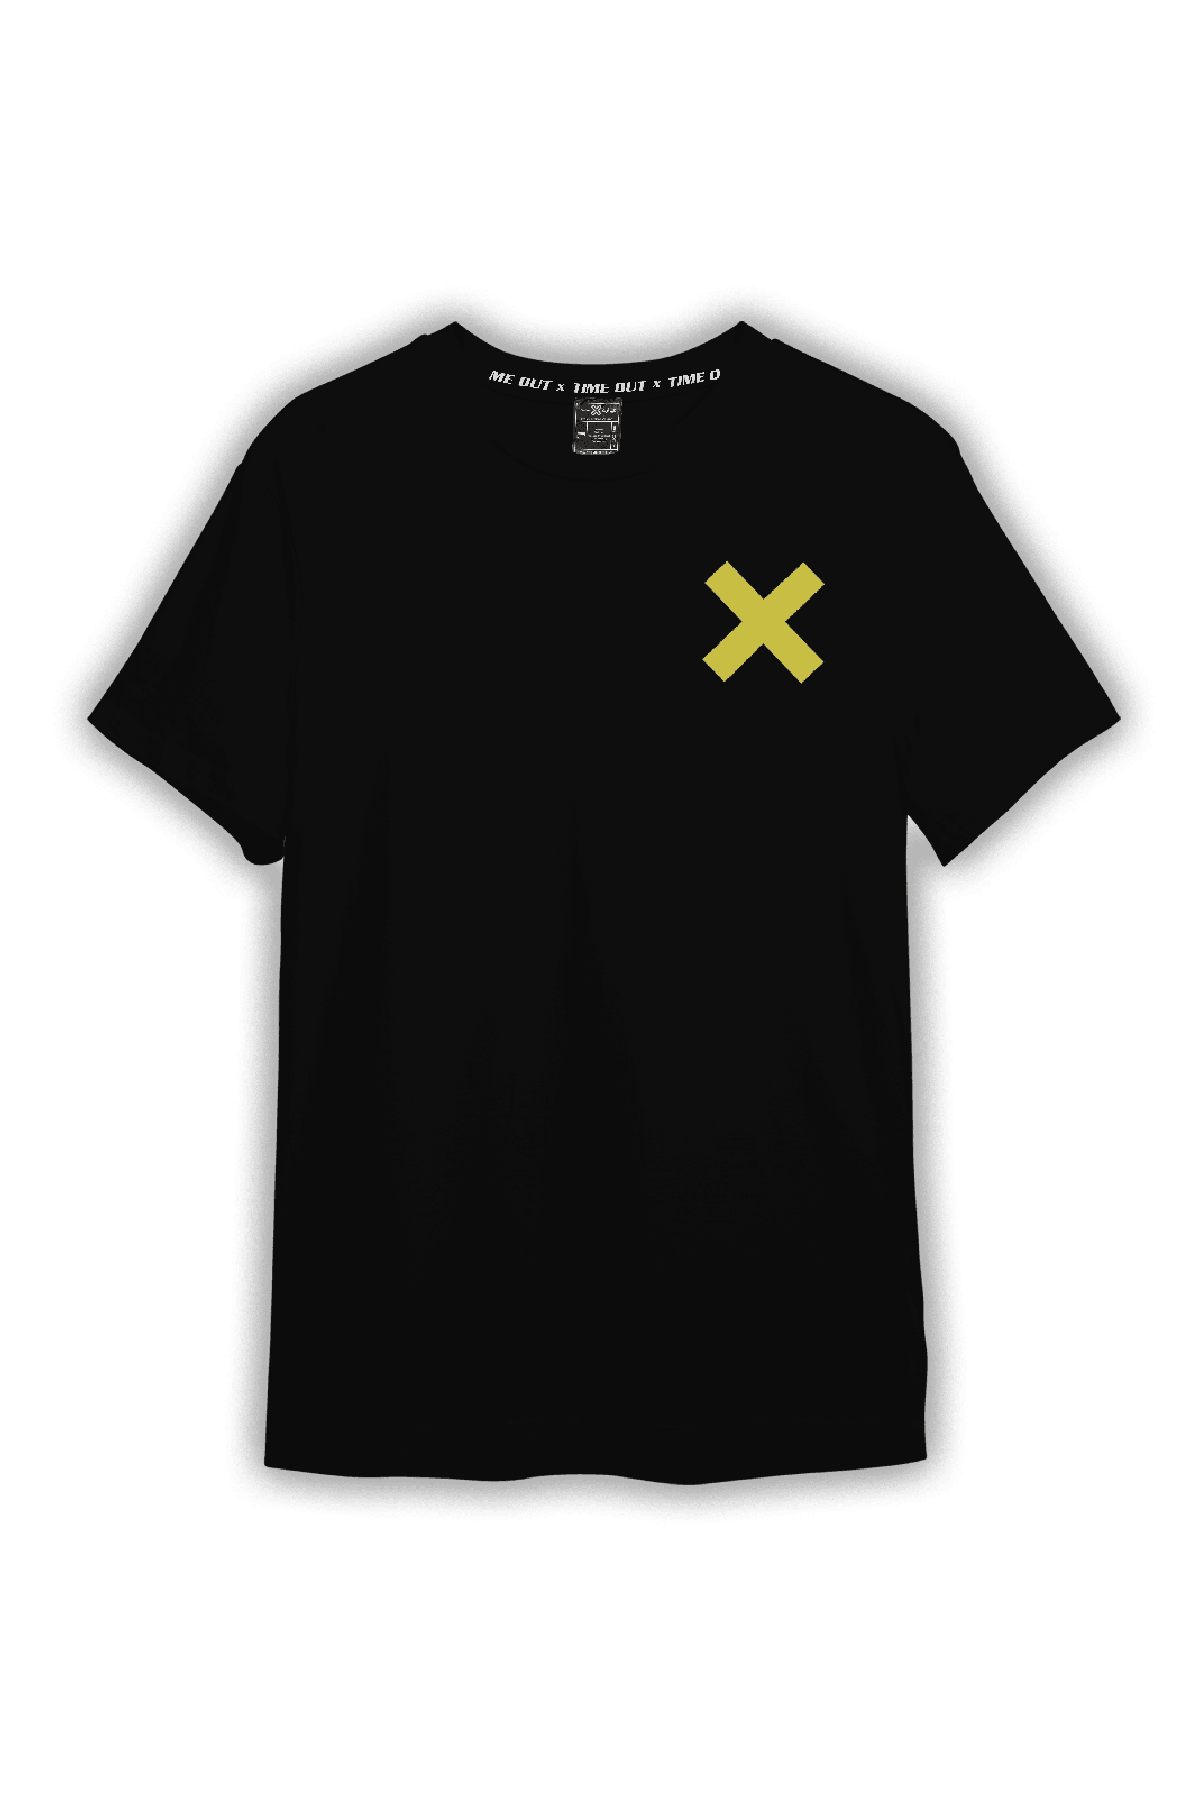 Unisex Time Out X Signature Pure Cotton Black T-shirt for Kids – Front